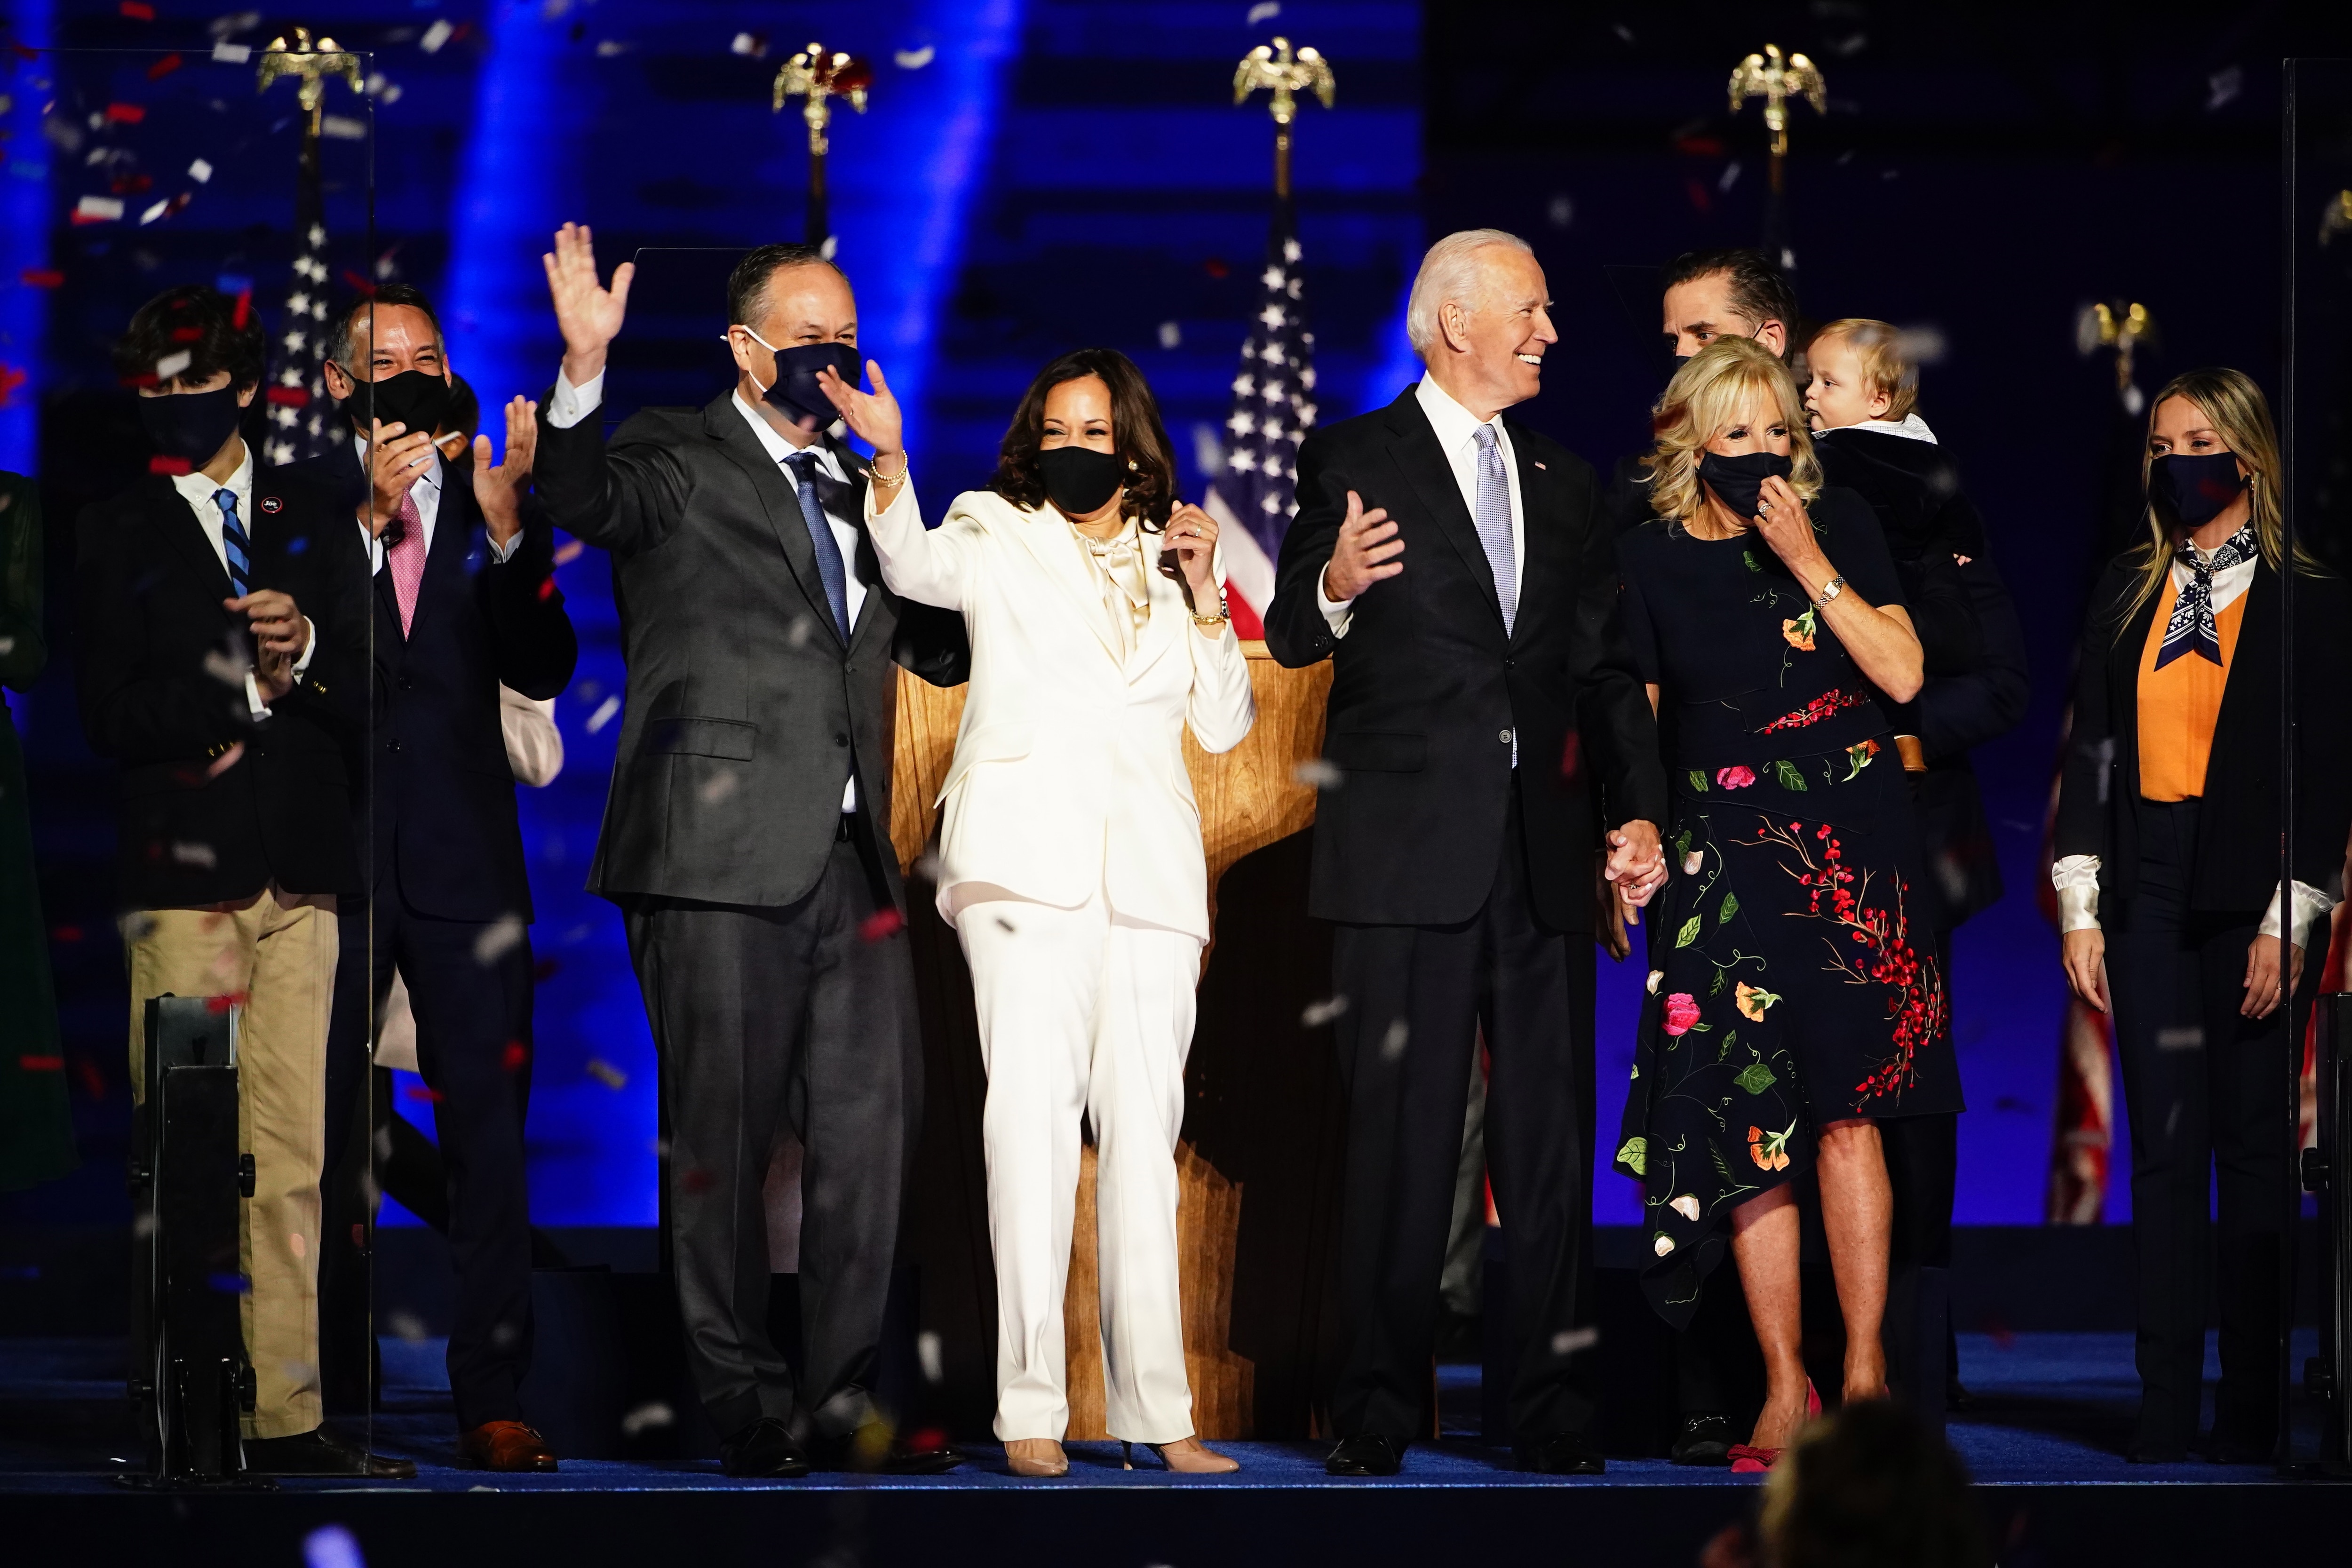 Joe Biden and Kamala Harris celebrate on stage with their families.